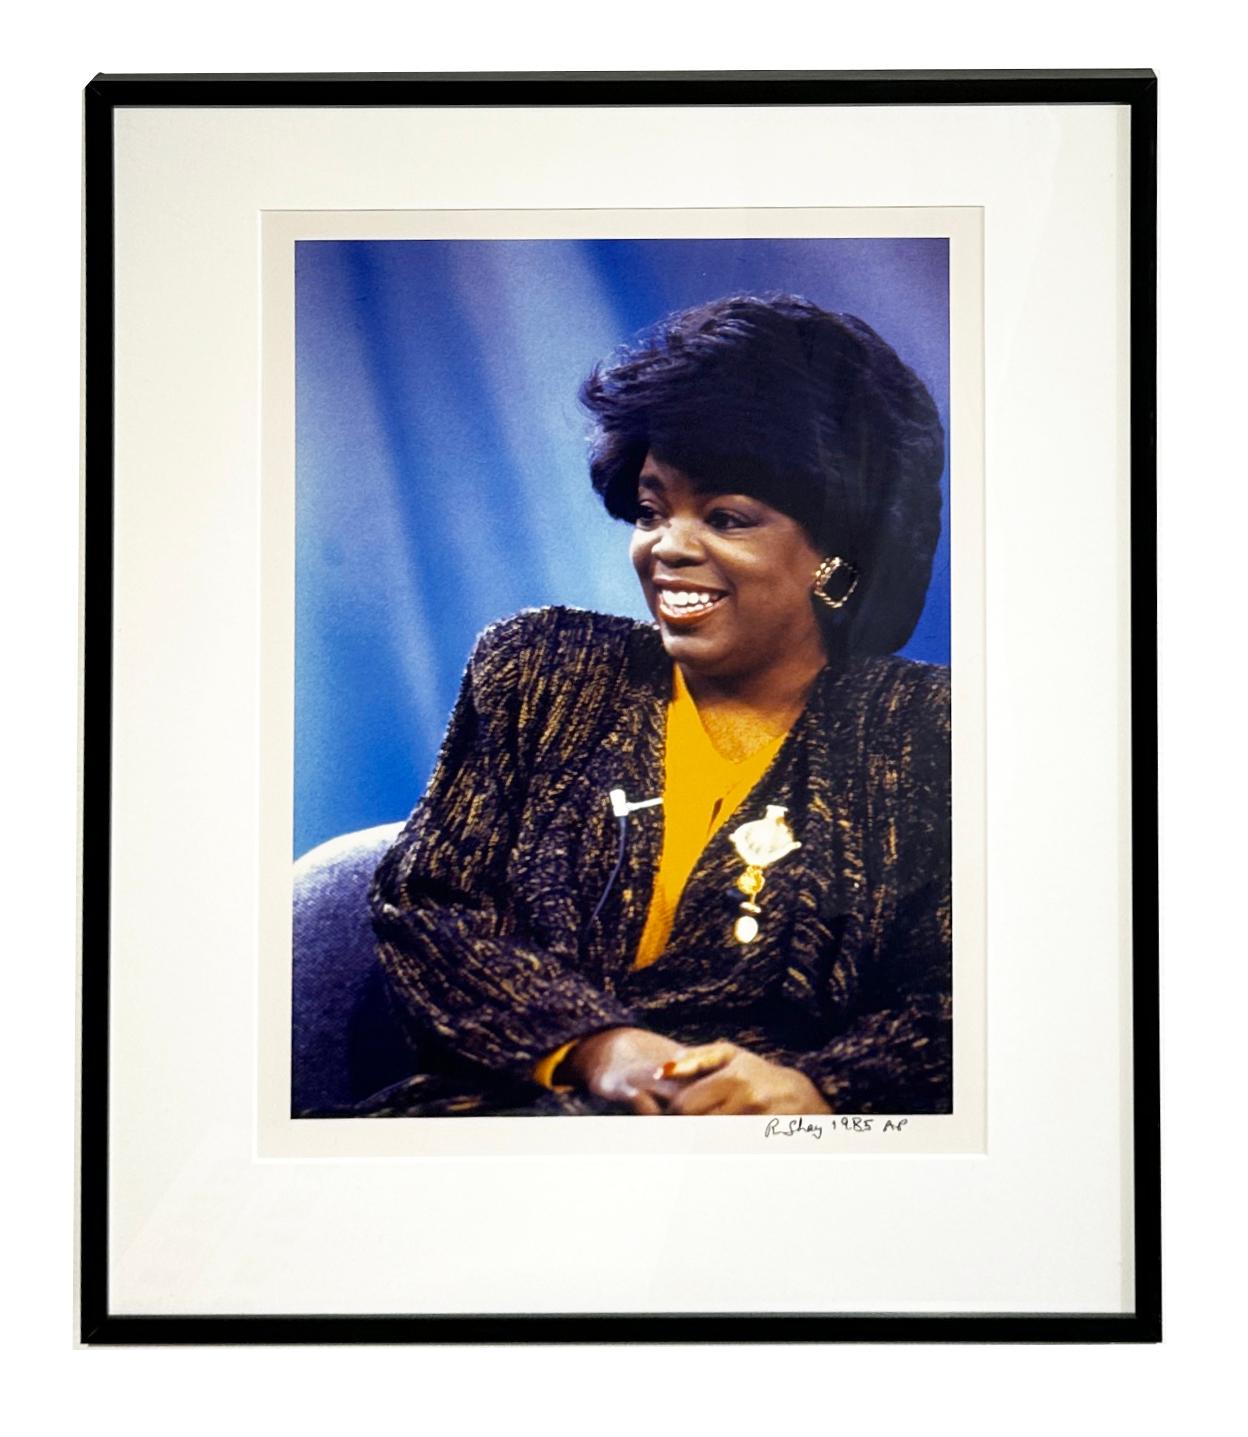 Oprah Winfrey on AM Chicago - Informal Portrait of the Talk Show Host, Framed - Photograph by Richard Shay